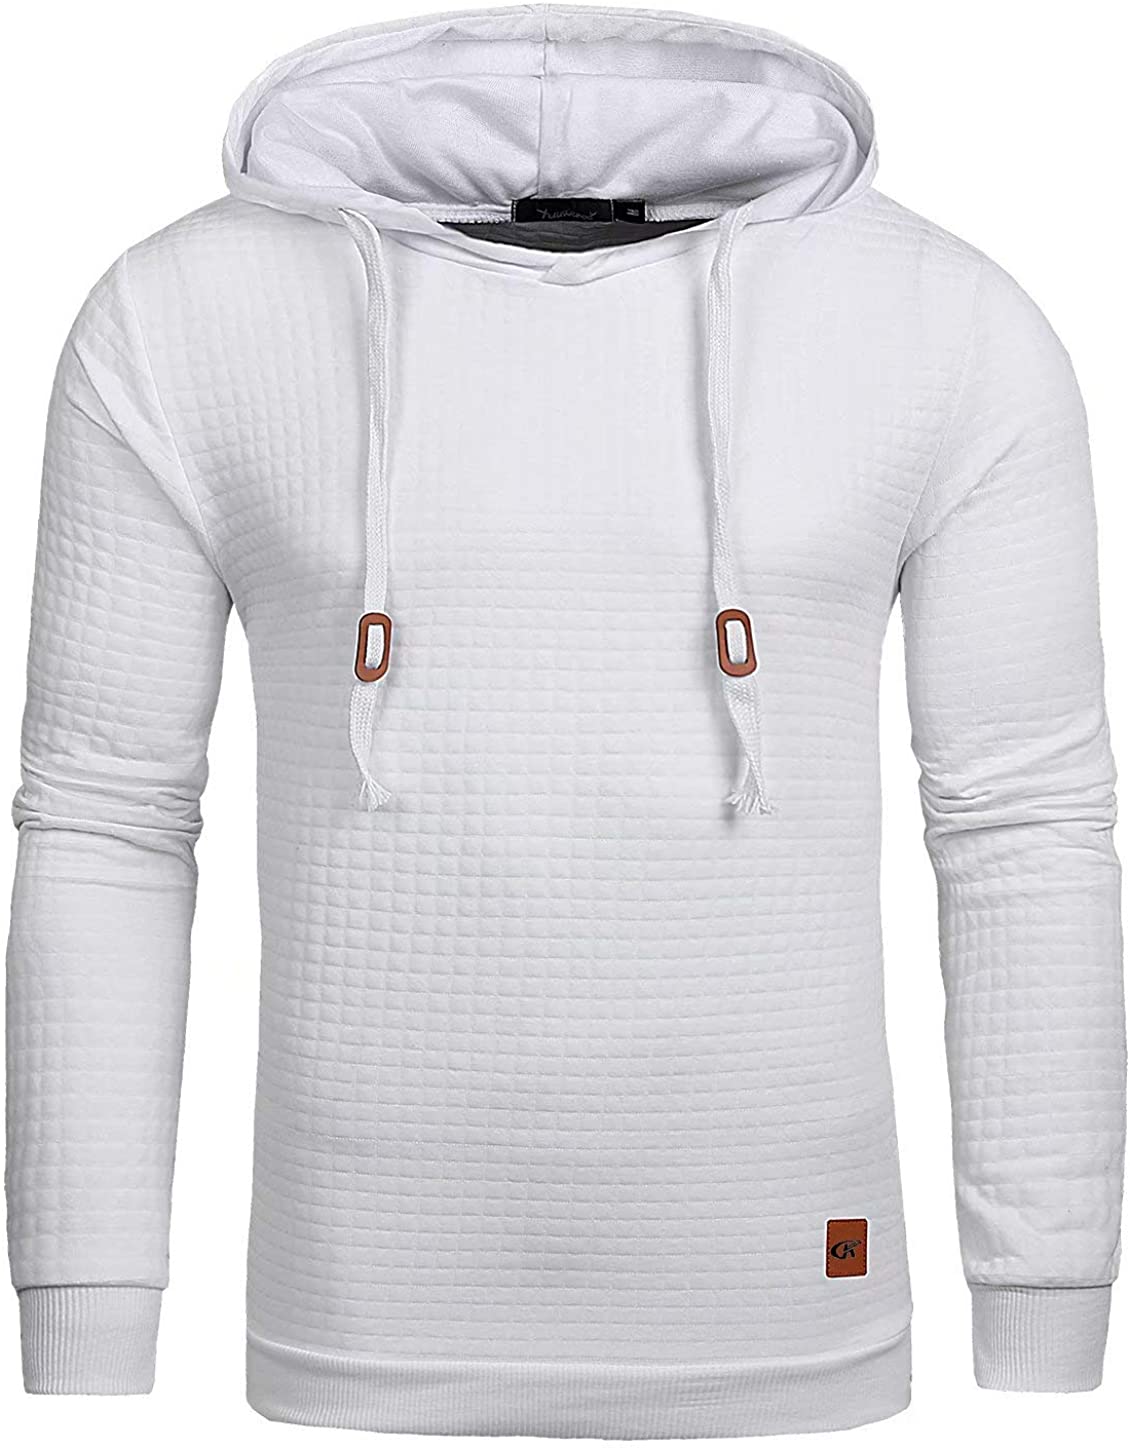 YuKaiChen Men's Casual Pullover Hoodies Long Sleeve Hooded Sweatshirts